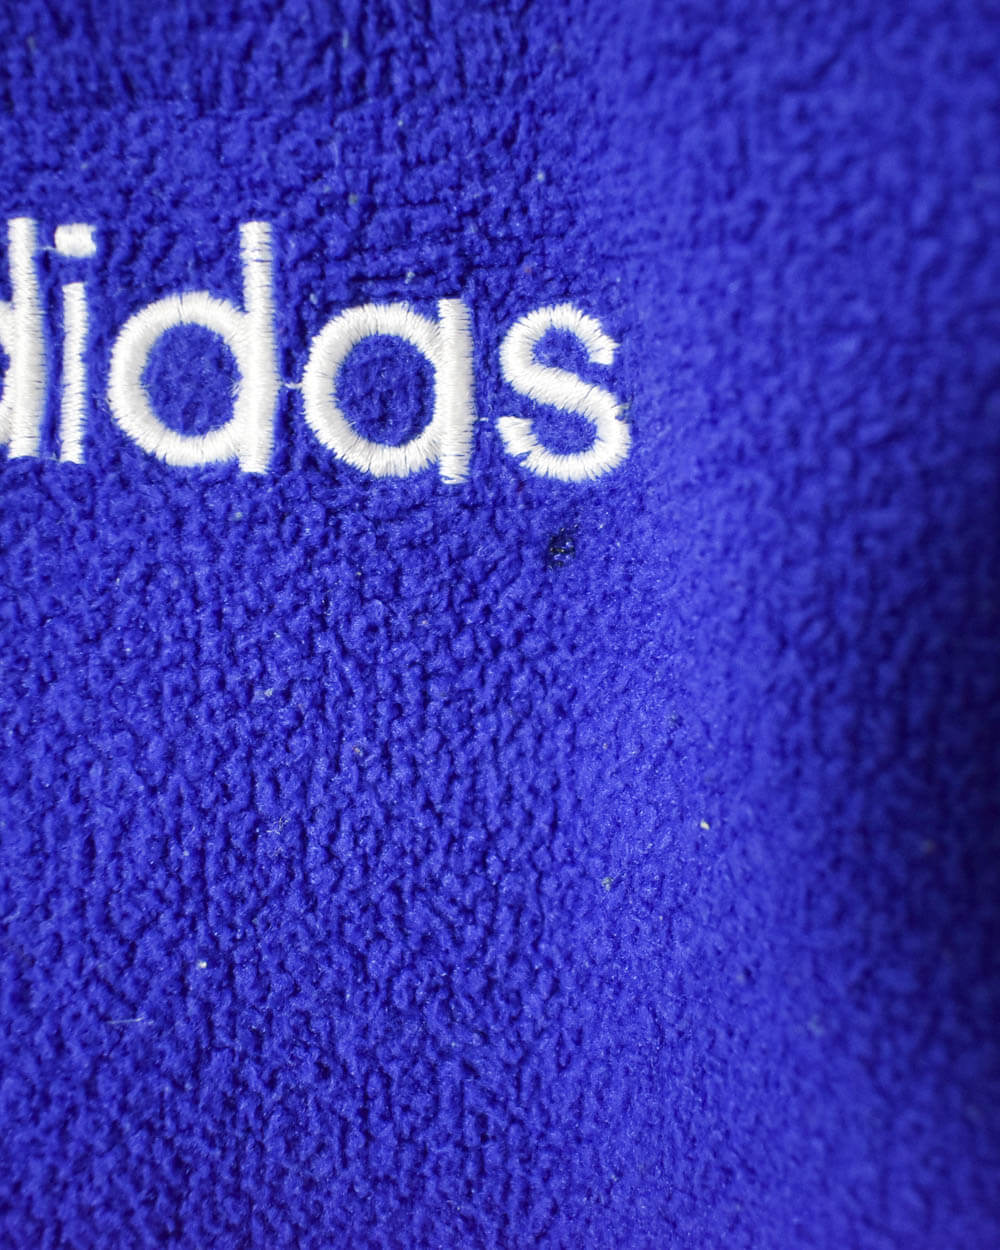 Blue Adidas Hamburger SV 1/4 Zip Fleece - X-Large